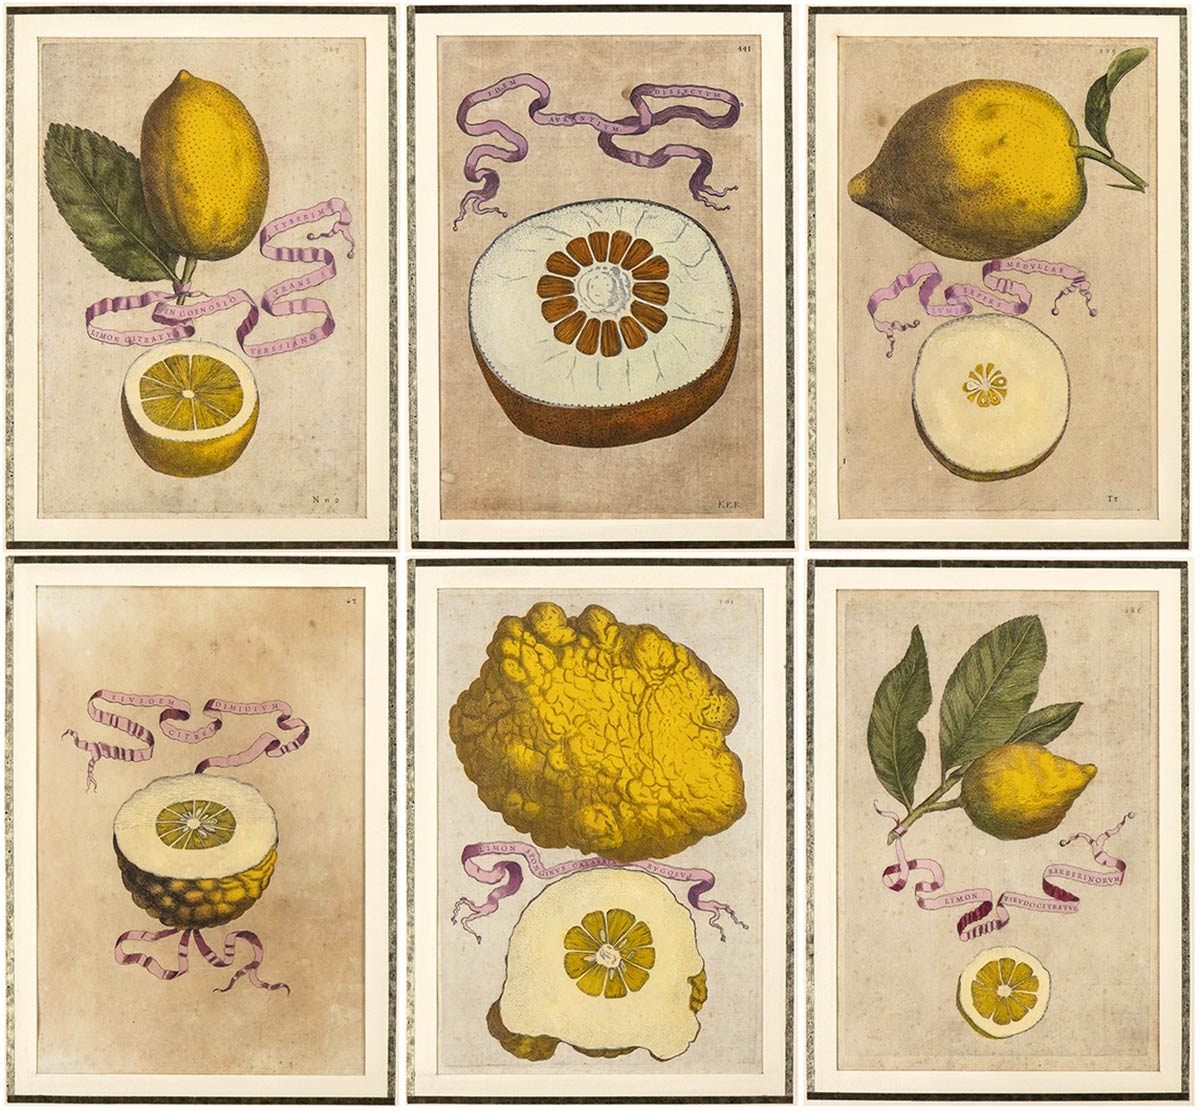 "Hesperides Sive de Malorum Aureorum Cultura et Usu Libras Quatuor" with lemon studies by Giovanni Battista Ferrari, 1646